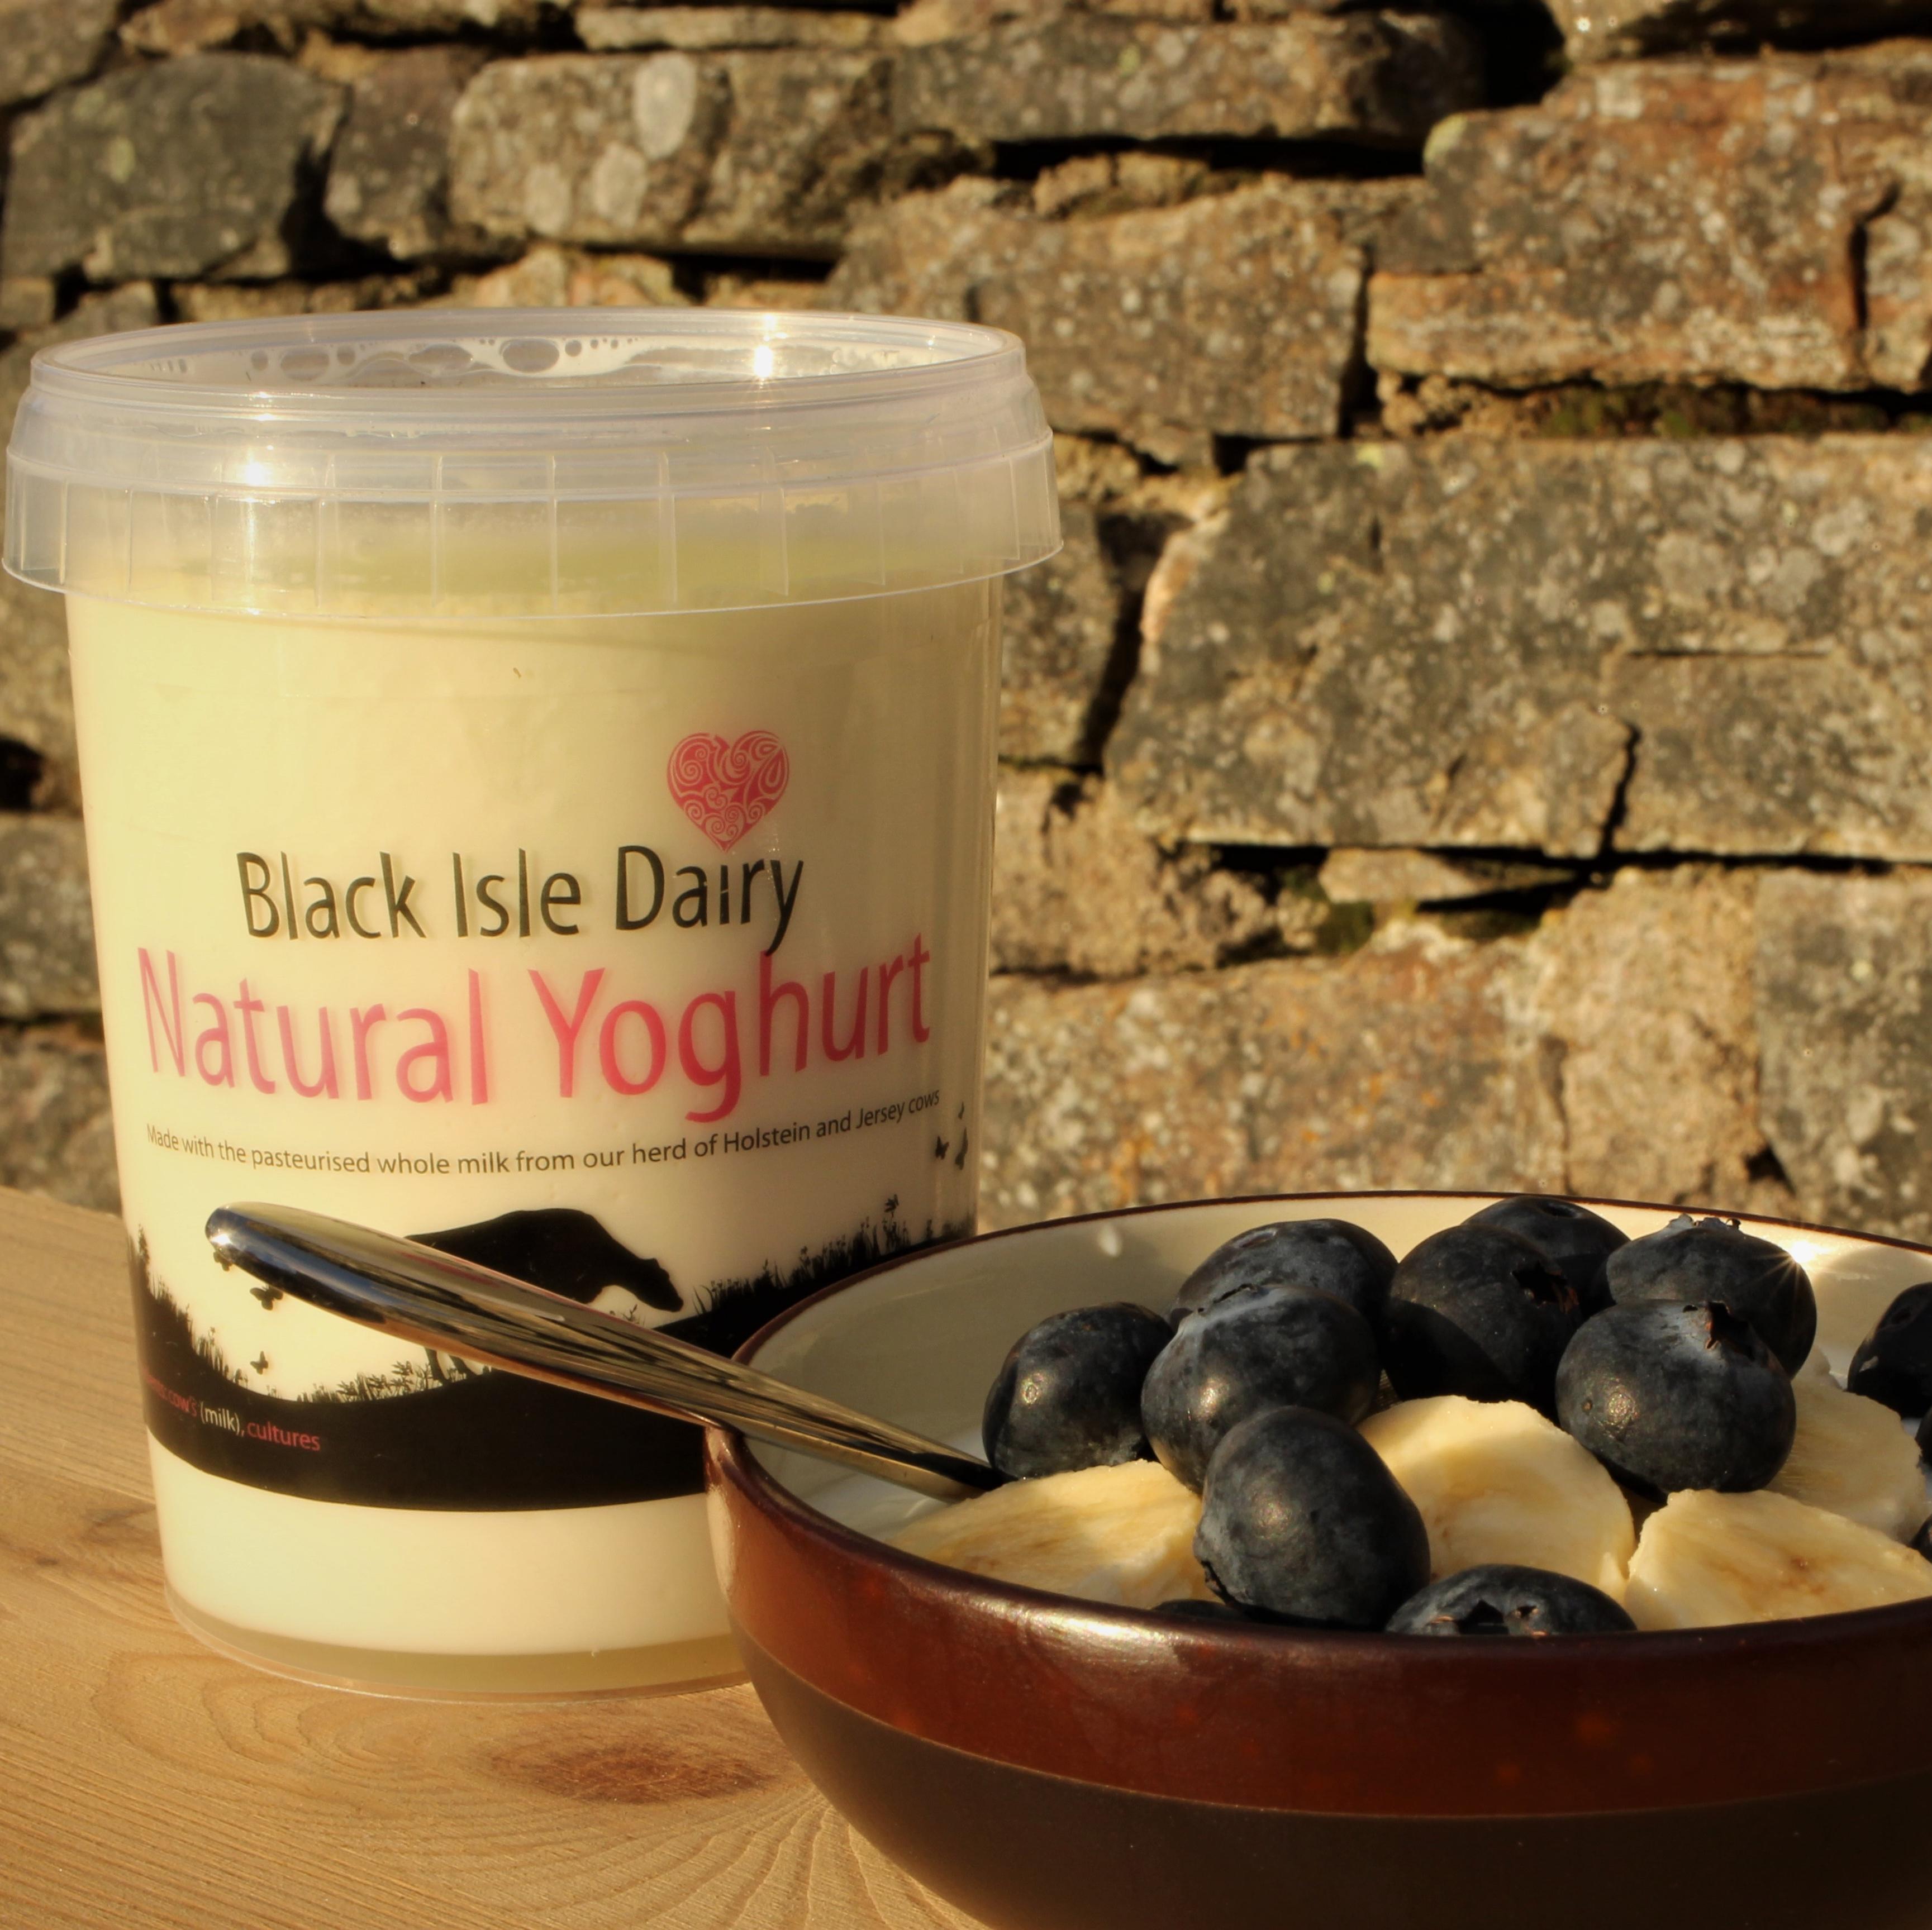 Black Isle Dairy yogurt plus bowl with fruit